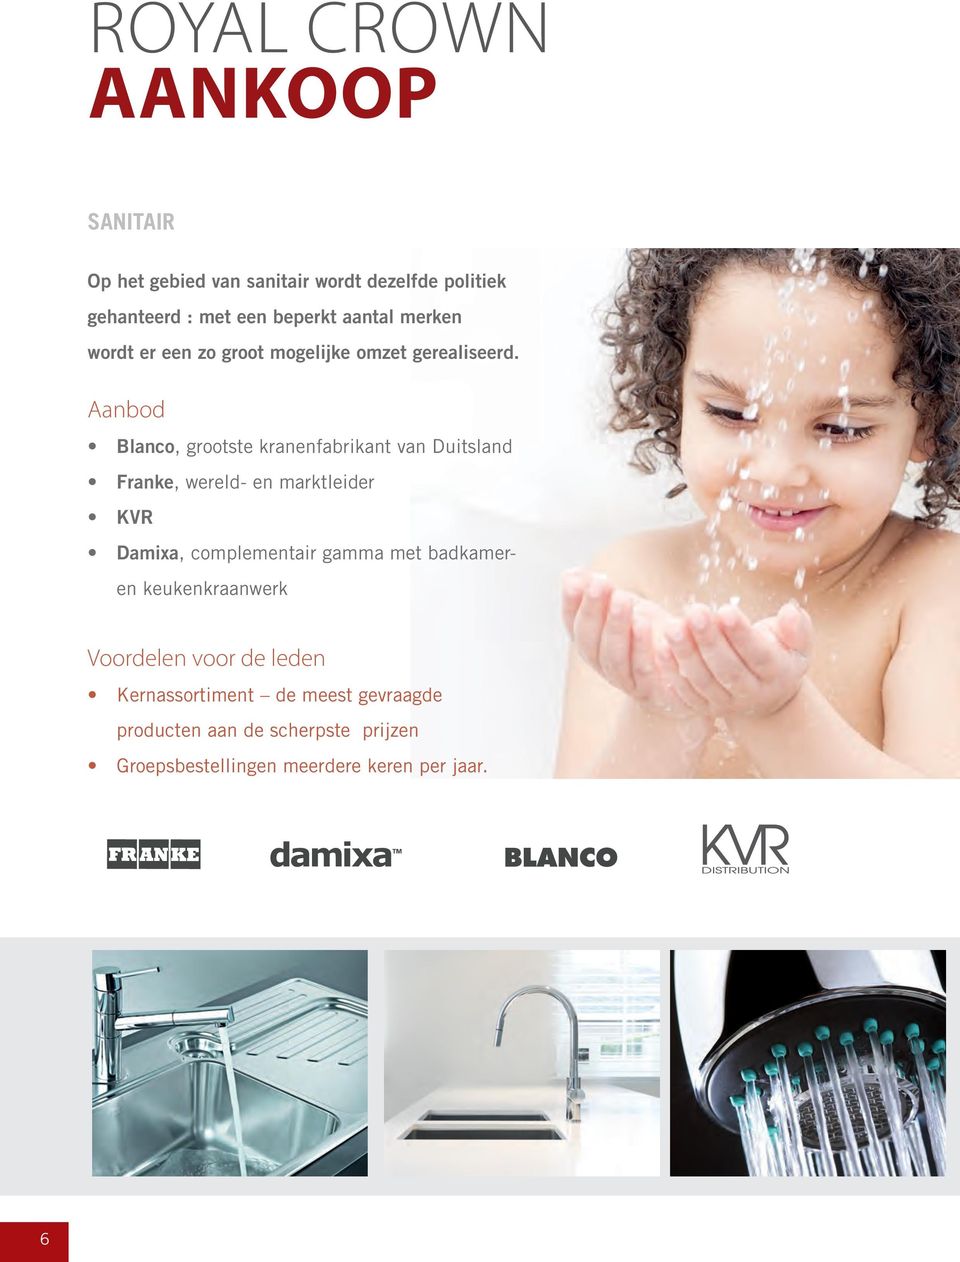 Aanbod Blanco, grootste kranenfabrikant van Duitsland Franke, wereld- en marktleider KVR Damixa, complementair